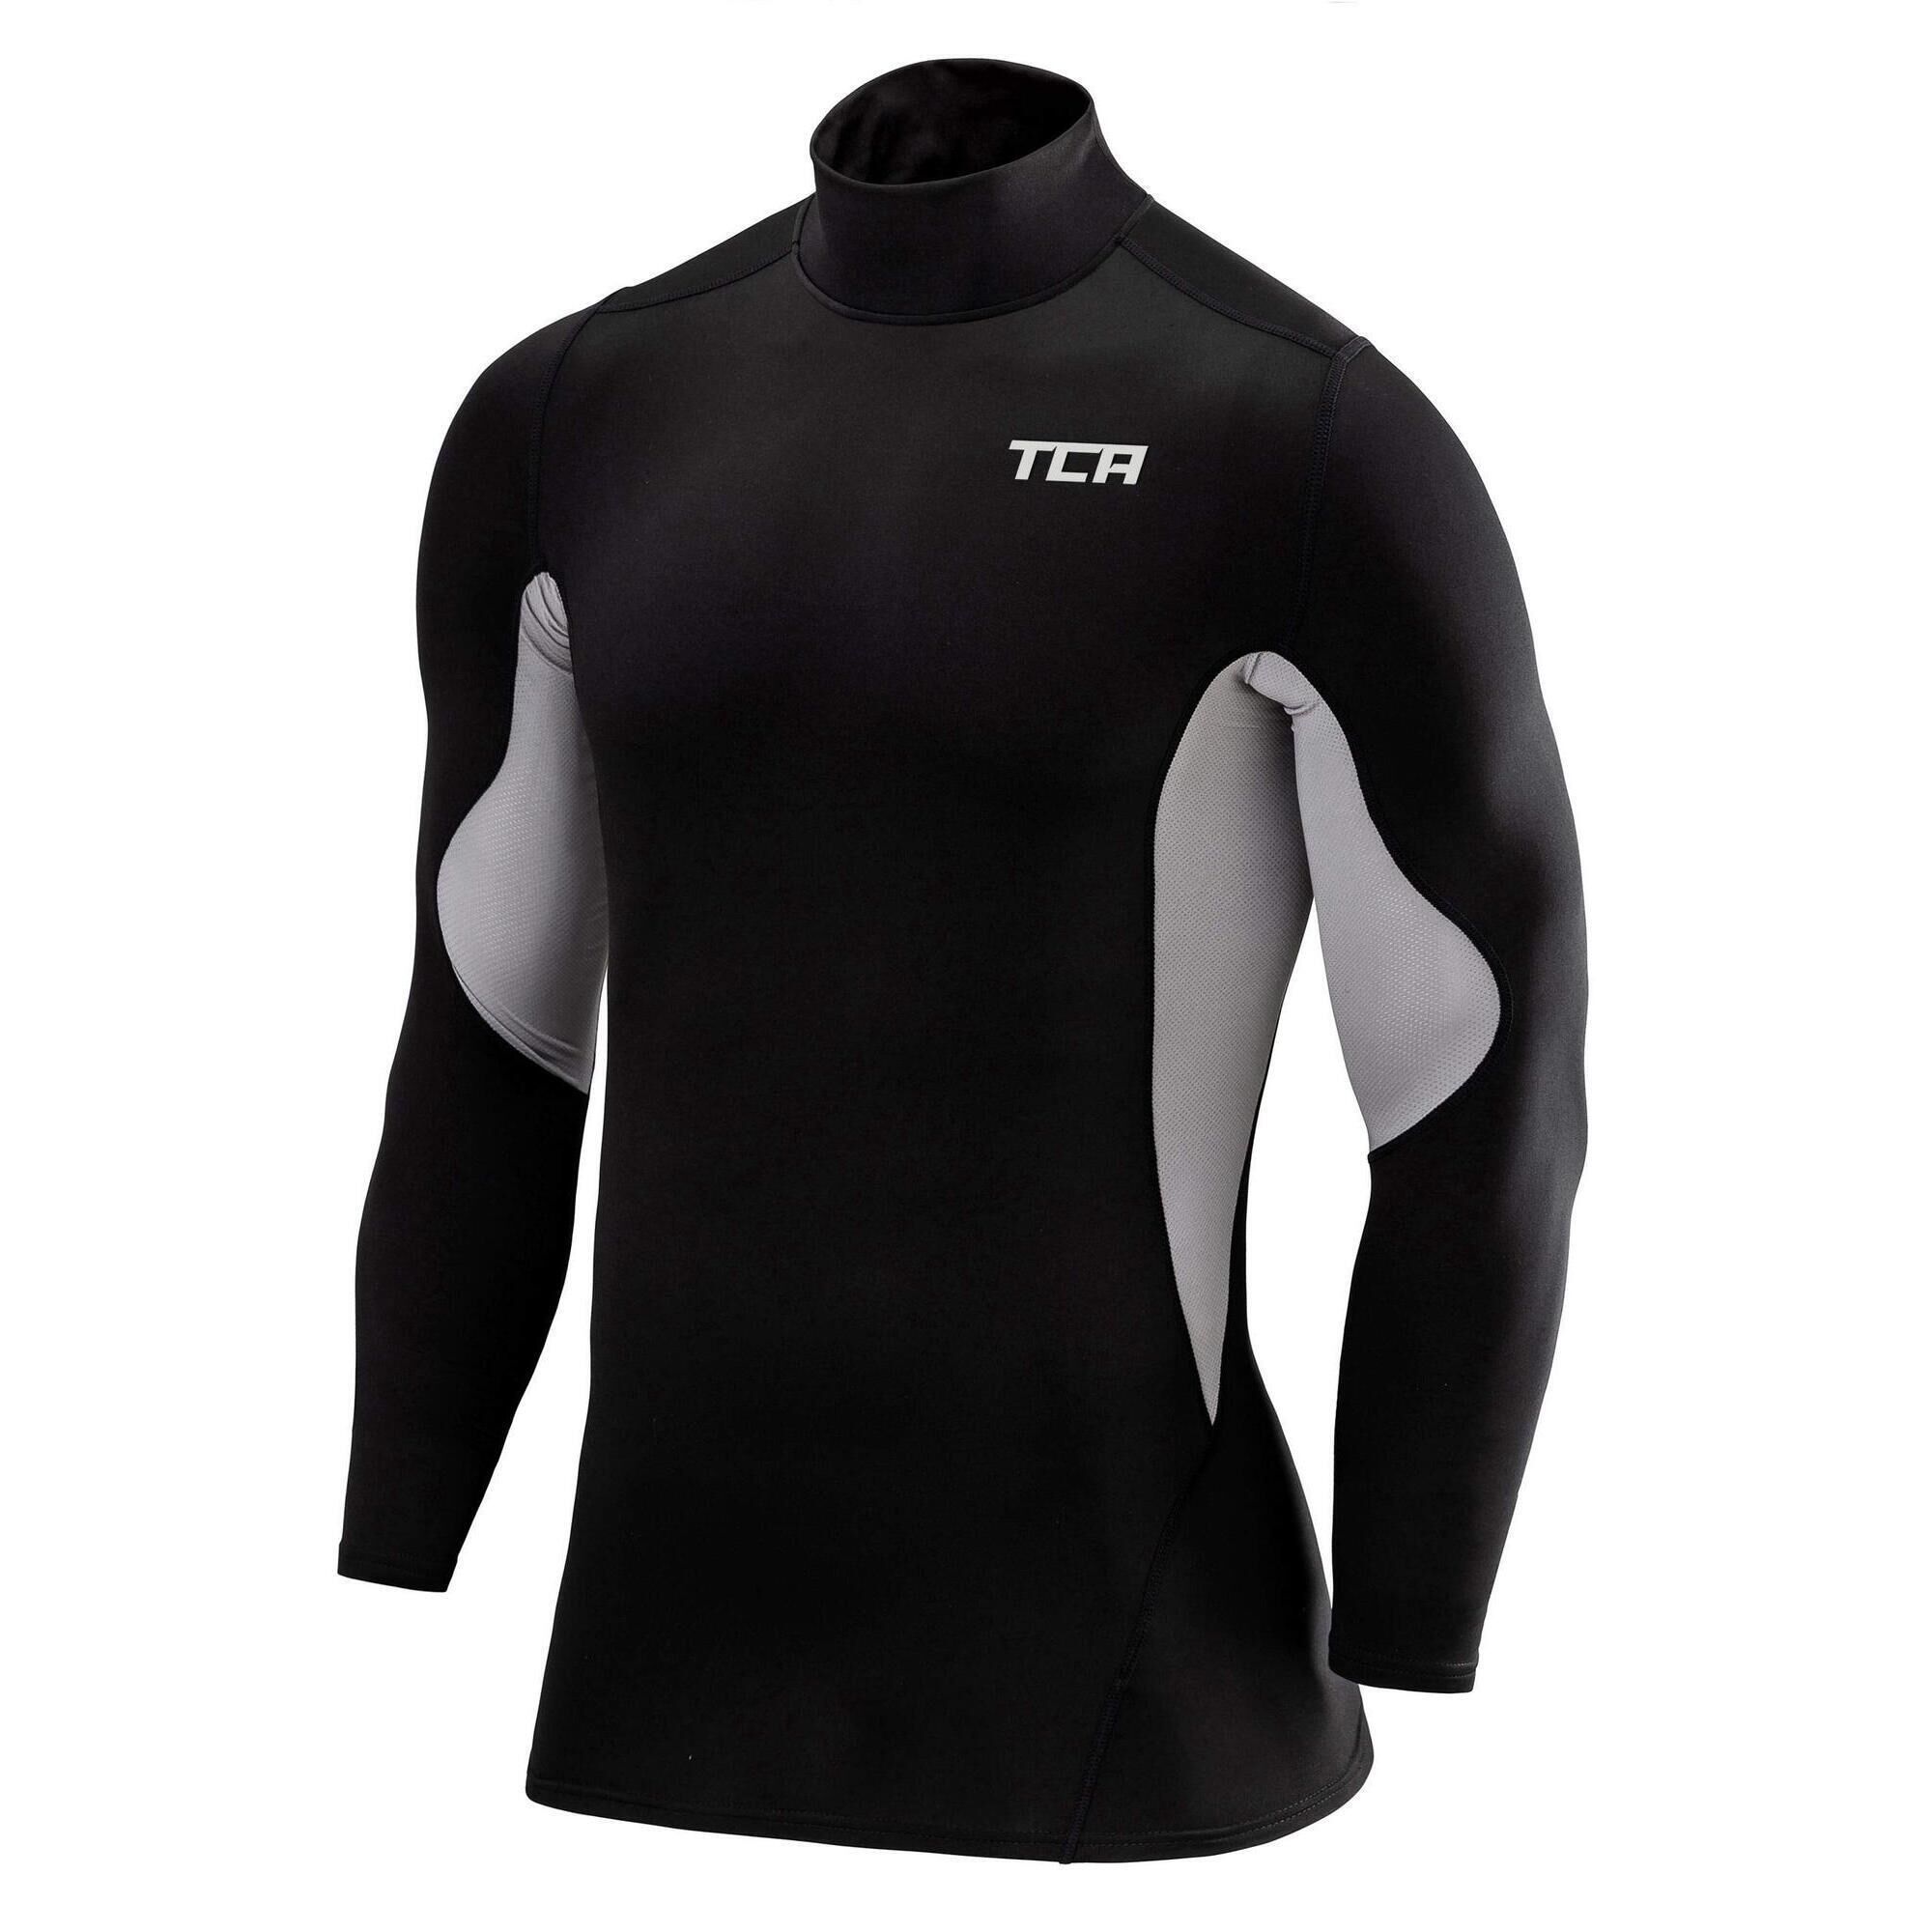 TCA Boys' Super Thermal Base Sleeve Top - Mock - Black/Cool Grey